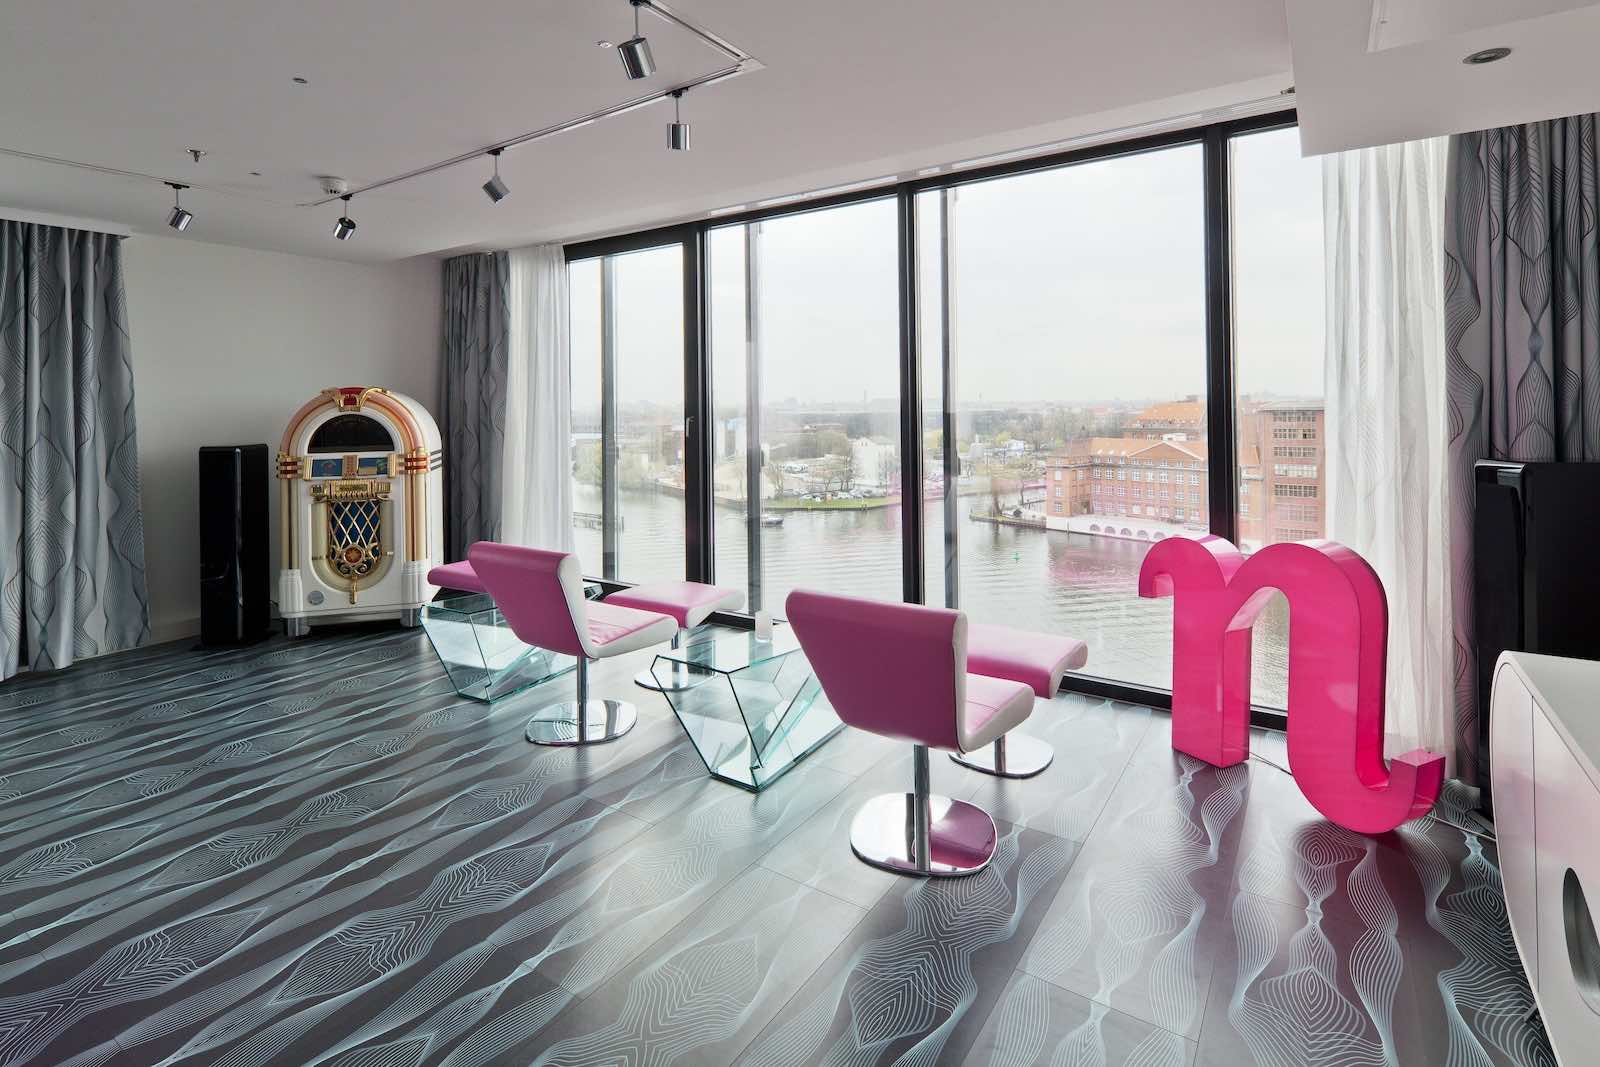 nhow_berlin- pink chairs juke box and river views